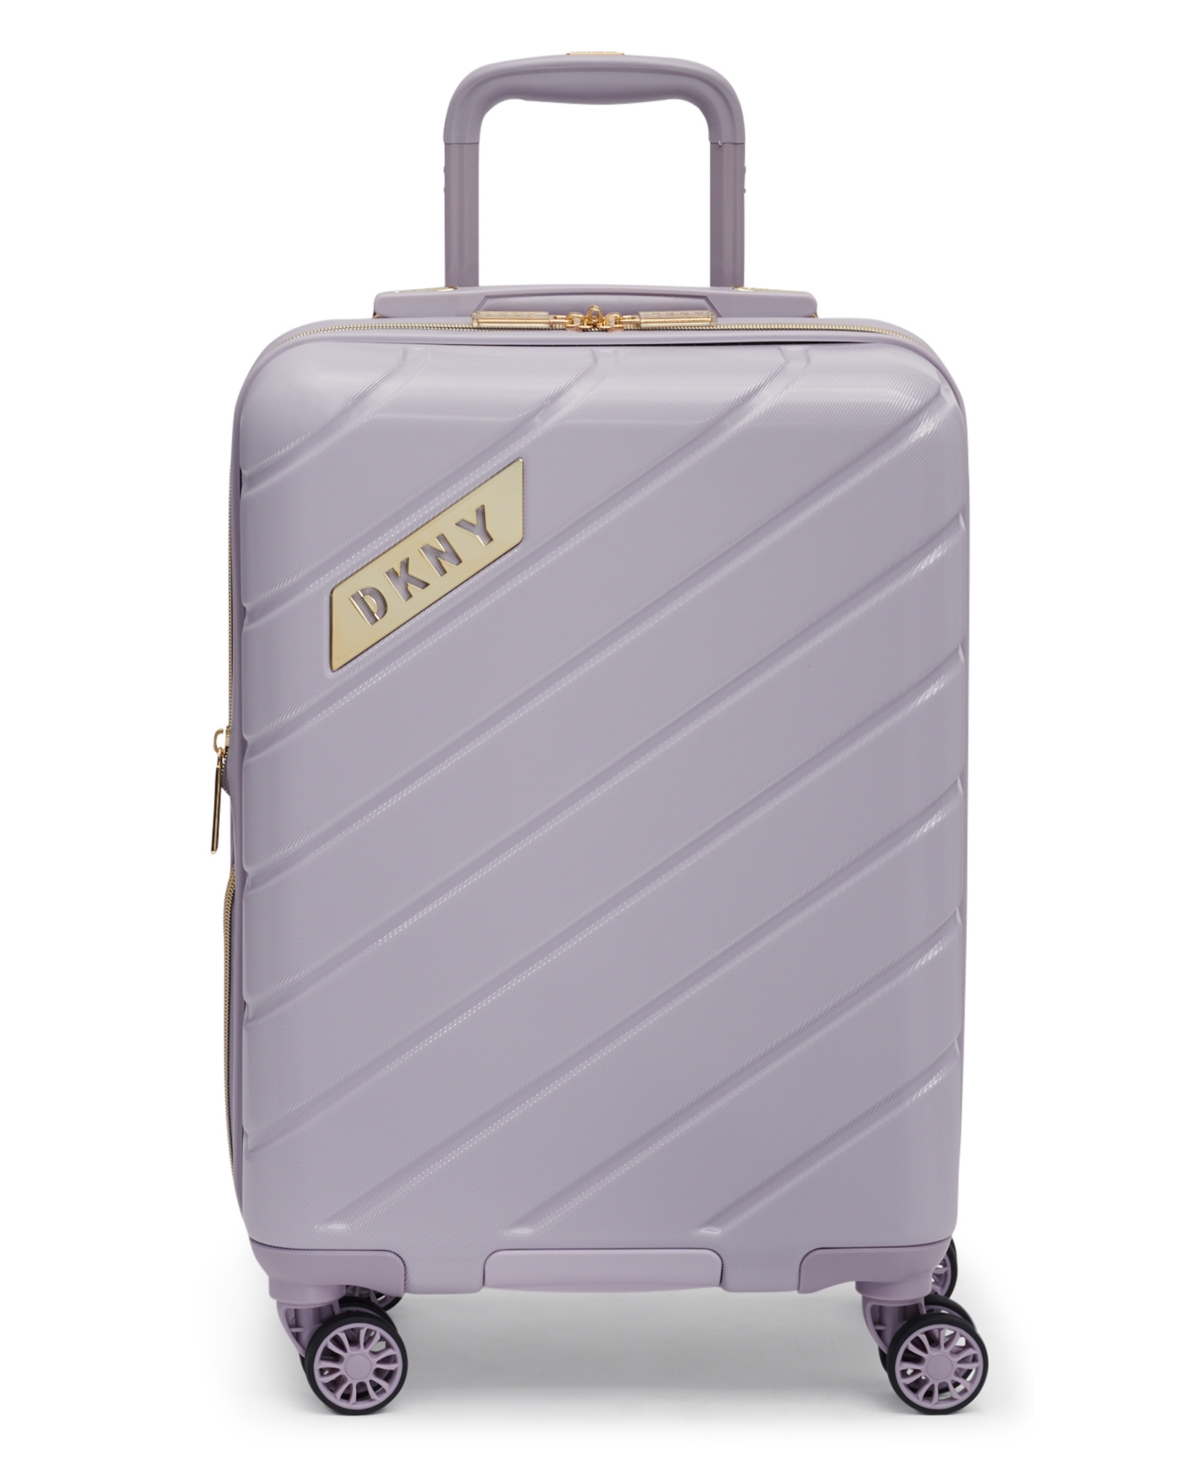 Bias 20" Upright Trolley Luggage - Lavender